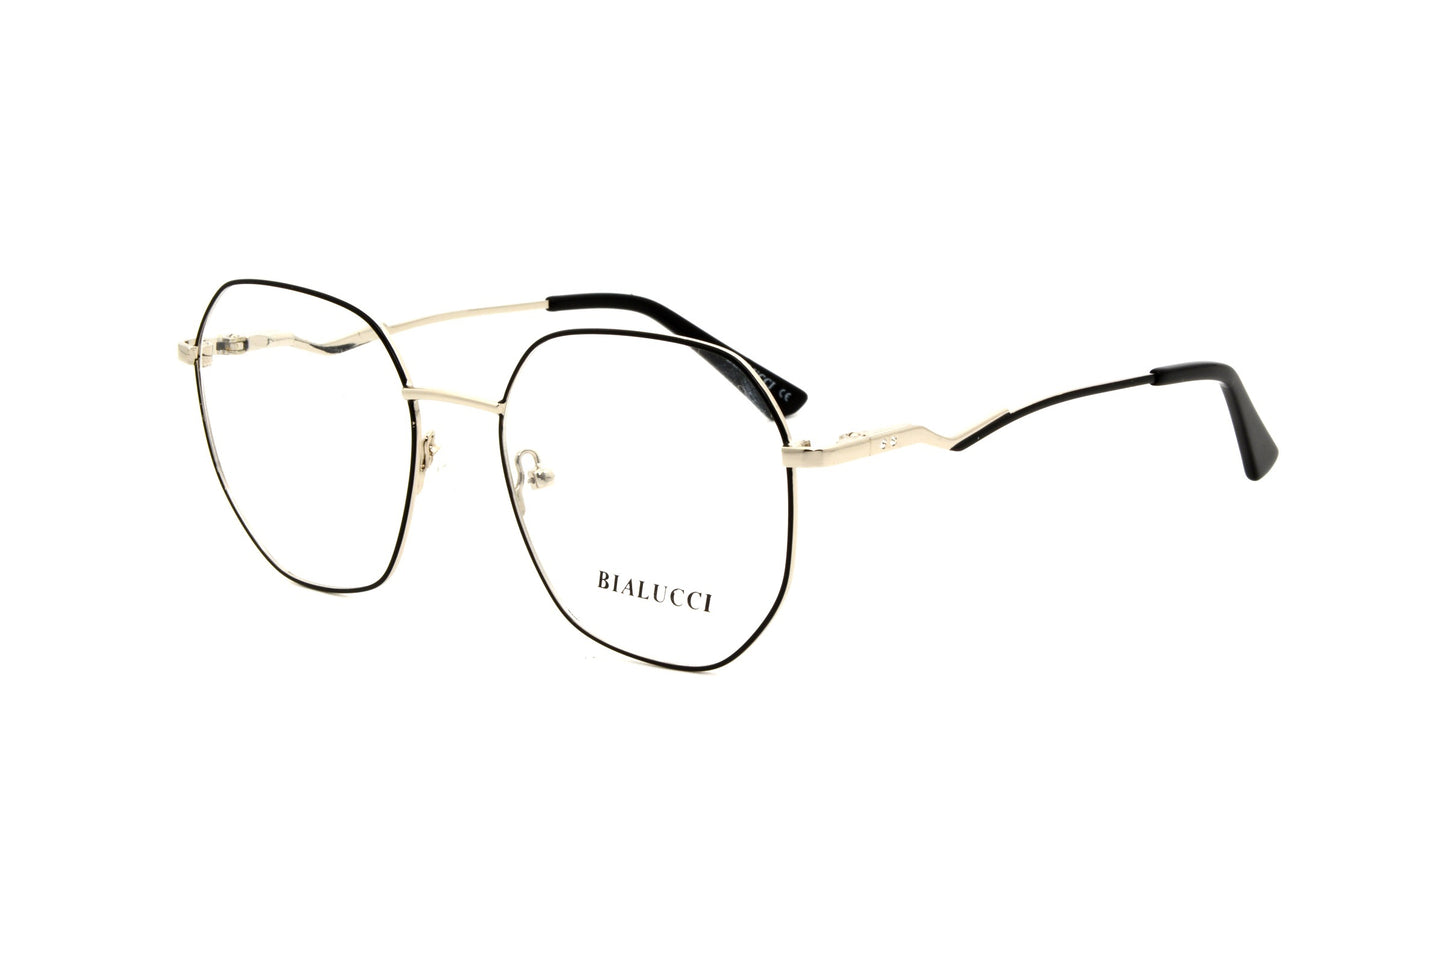 Bialucci eyewear XC 62058 C1